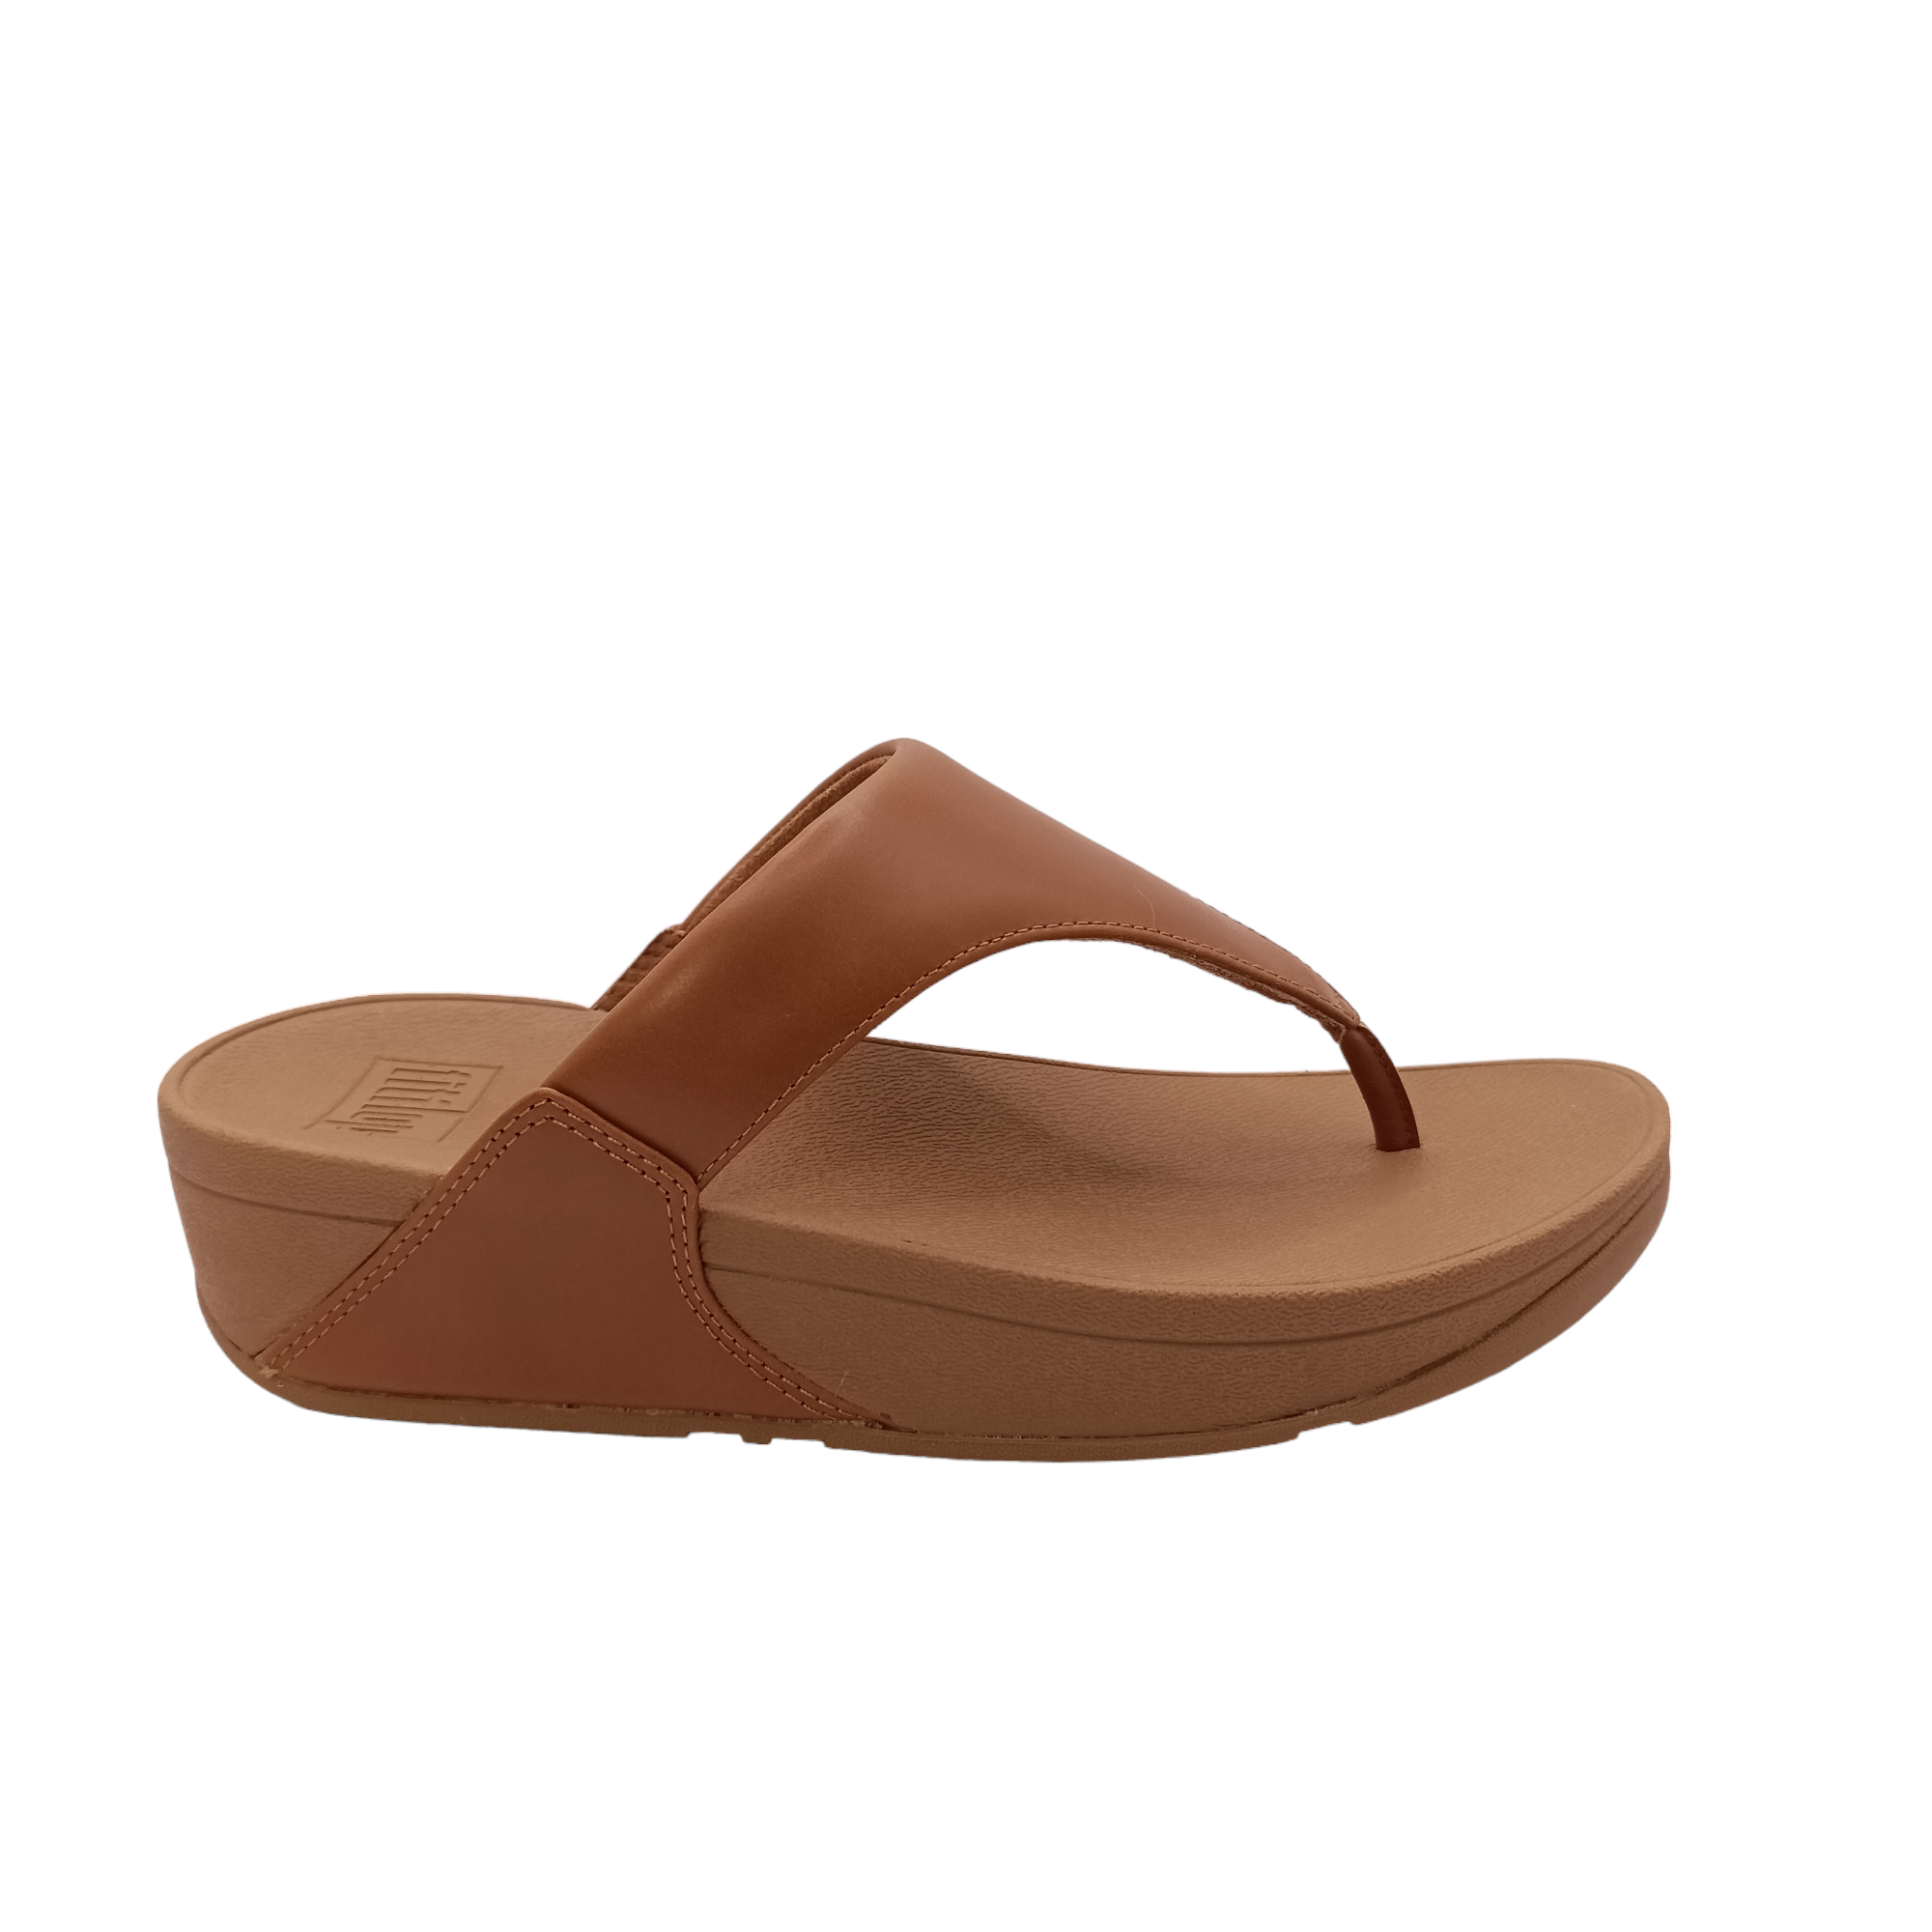 Lulu Leather Toepost - shoe&me - fitflop - Jandal - Jandals, Platform, Summer, Womens